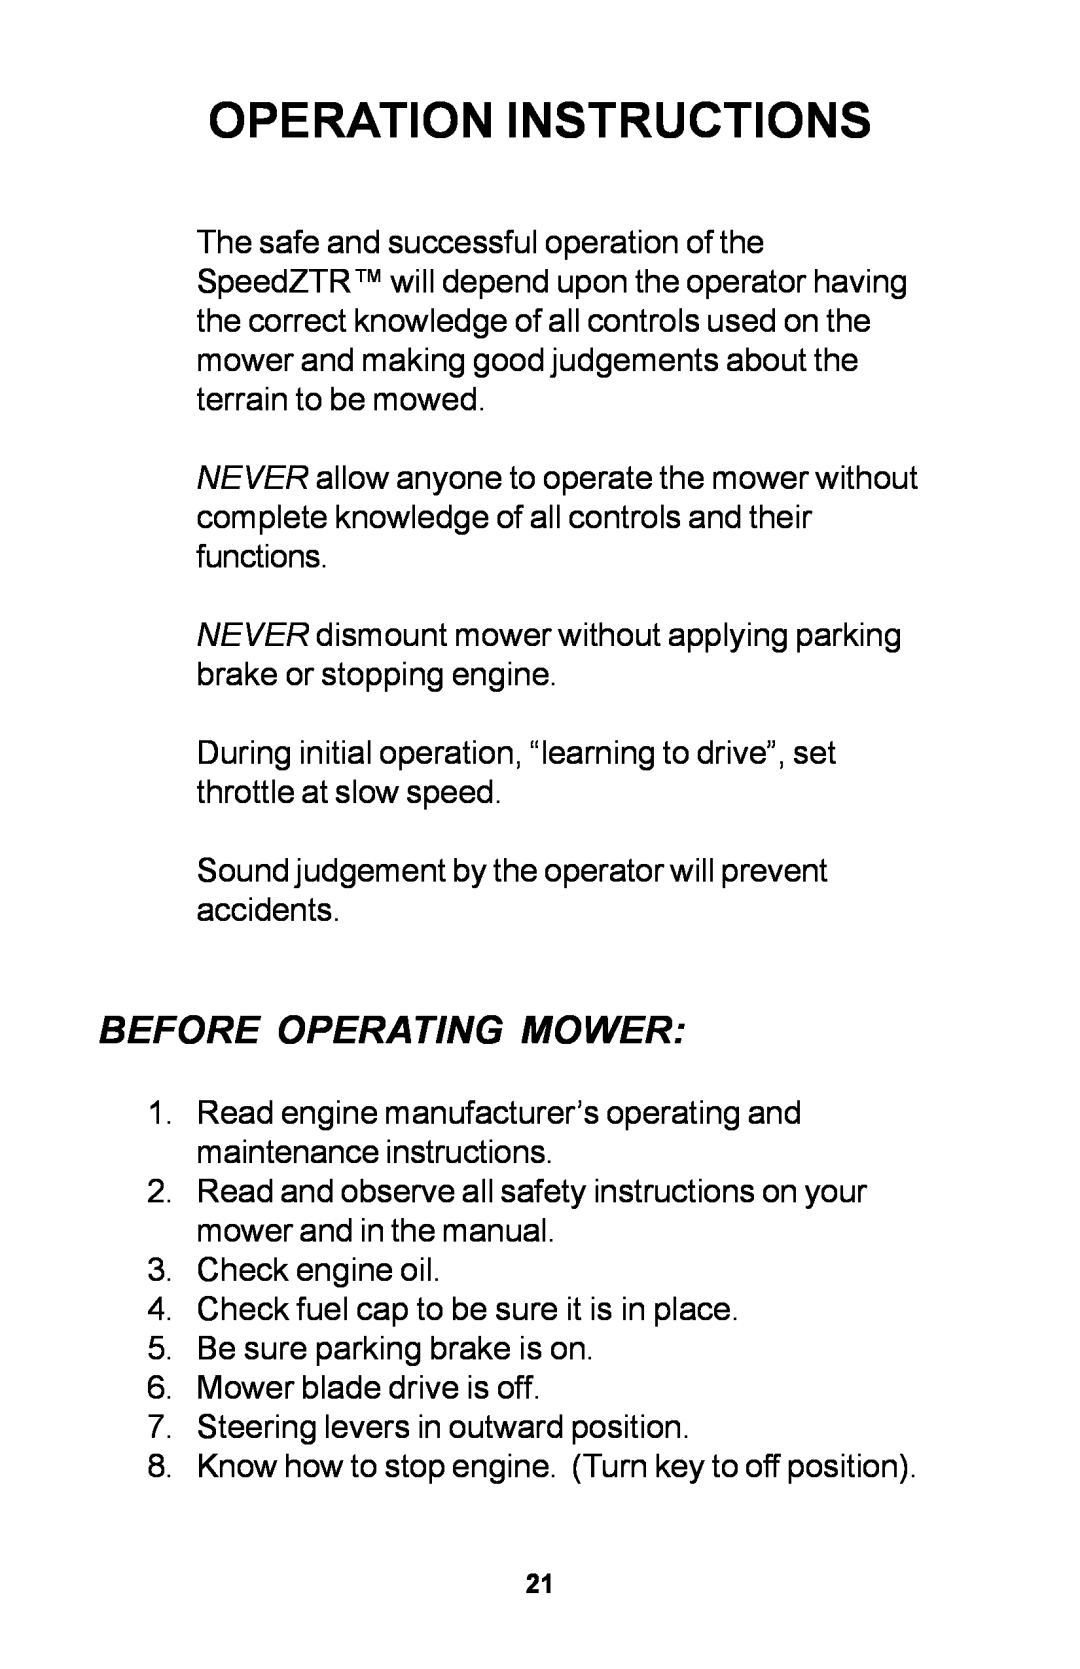 Dixon 30 manual Operation Instructions, Before Operating Mower 